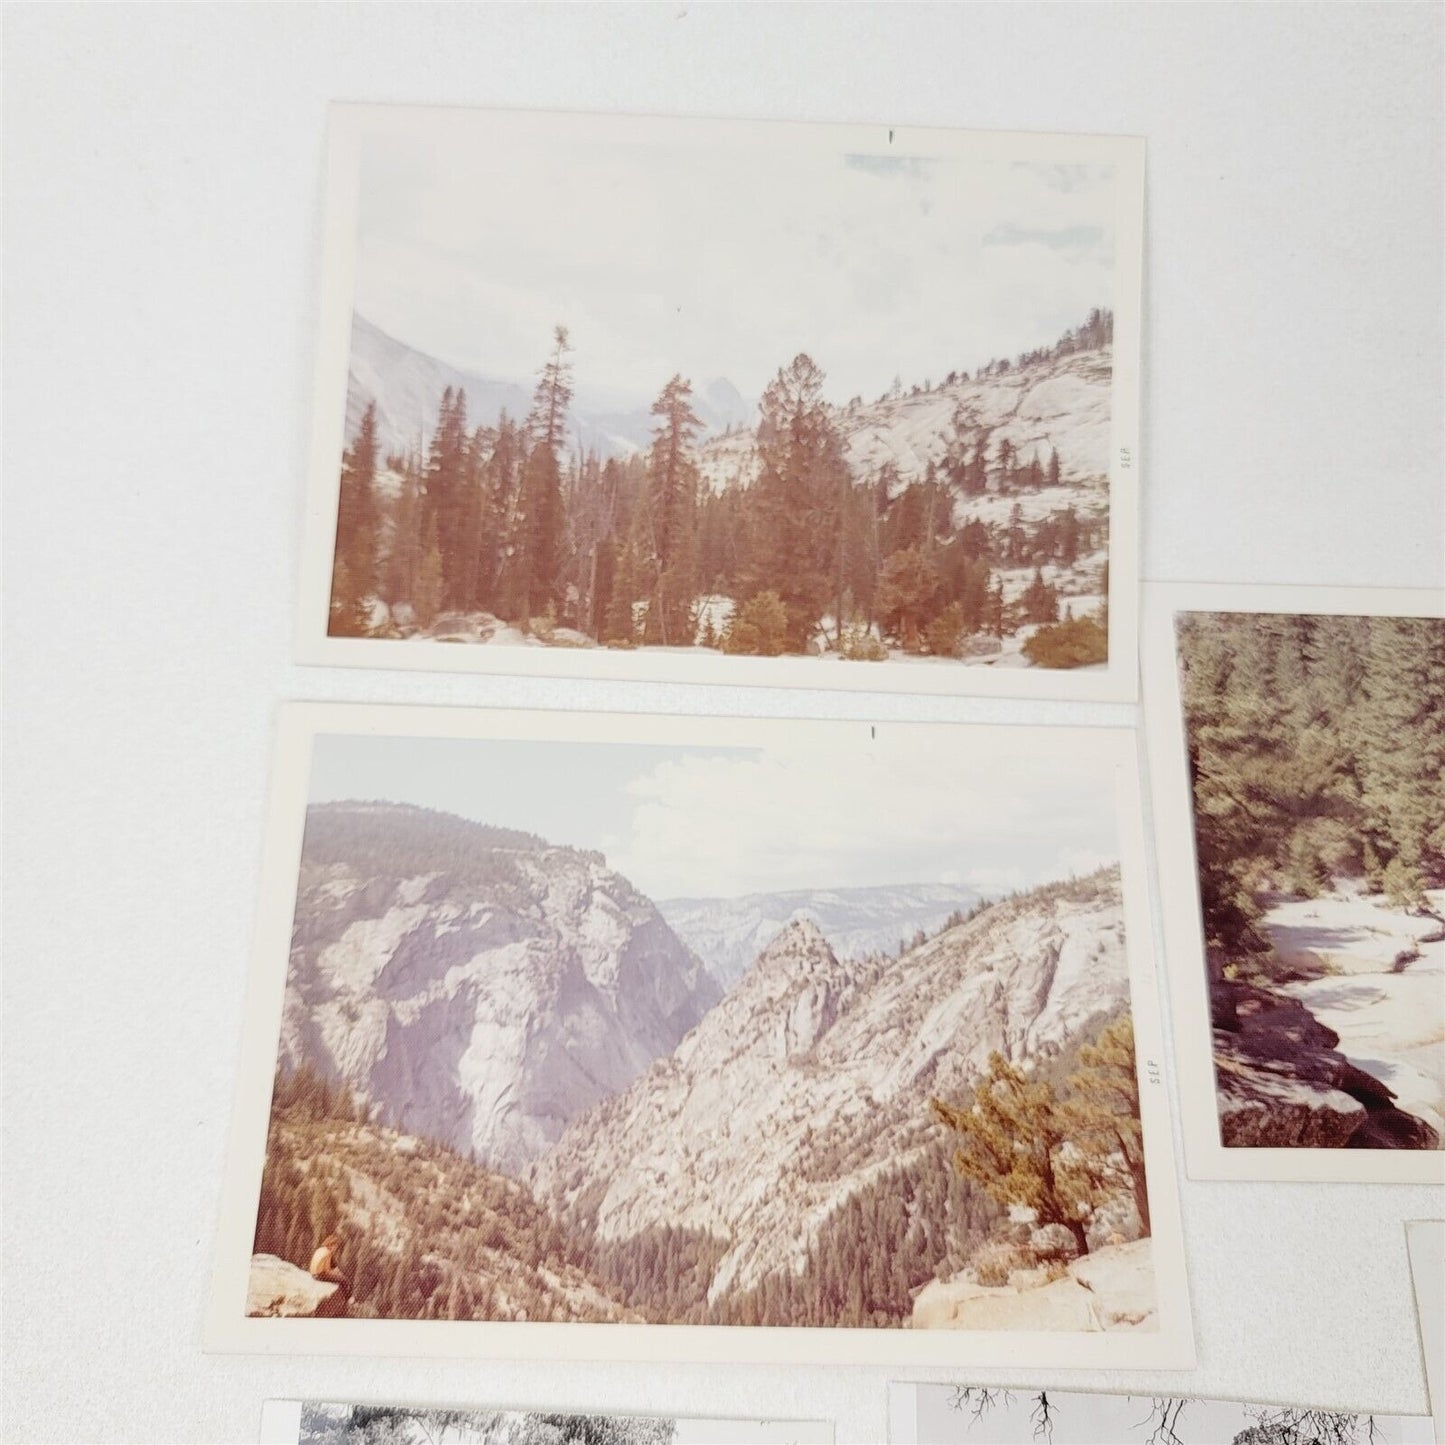 19 Vintage Photos Yosemite Park Trees Waterfall Sawyers Half Dome Photography